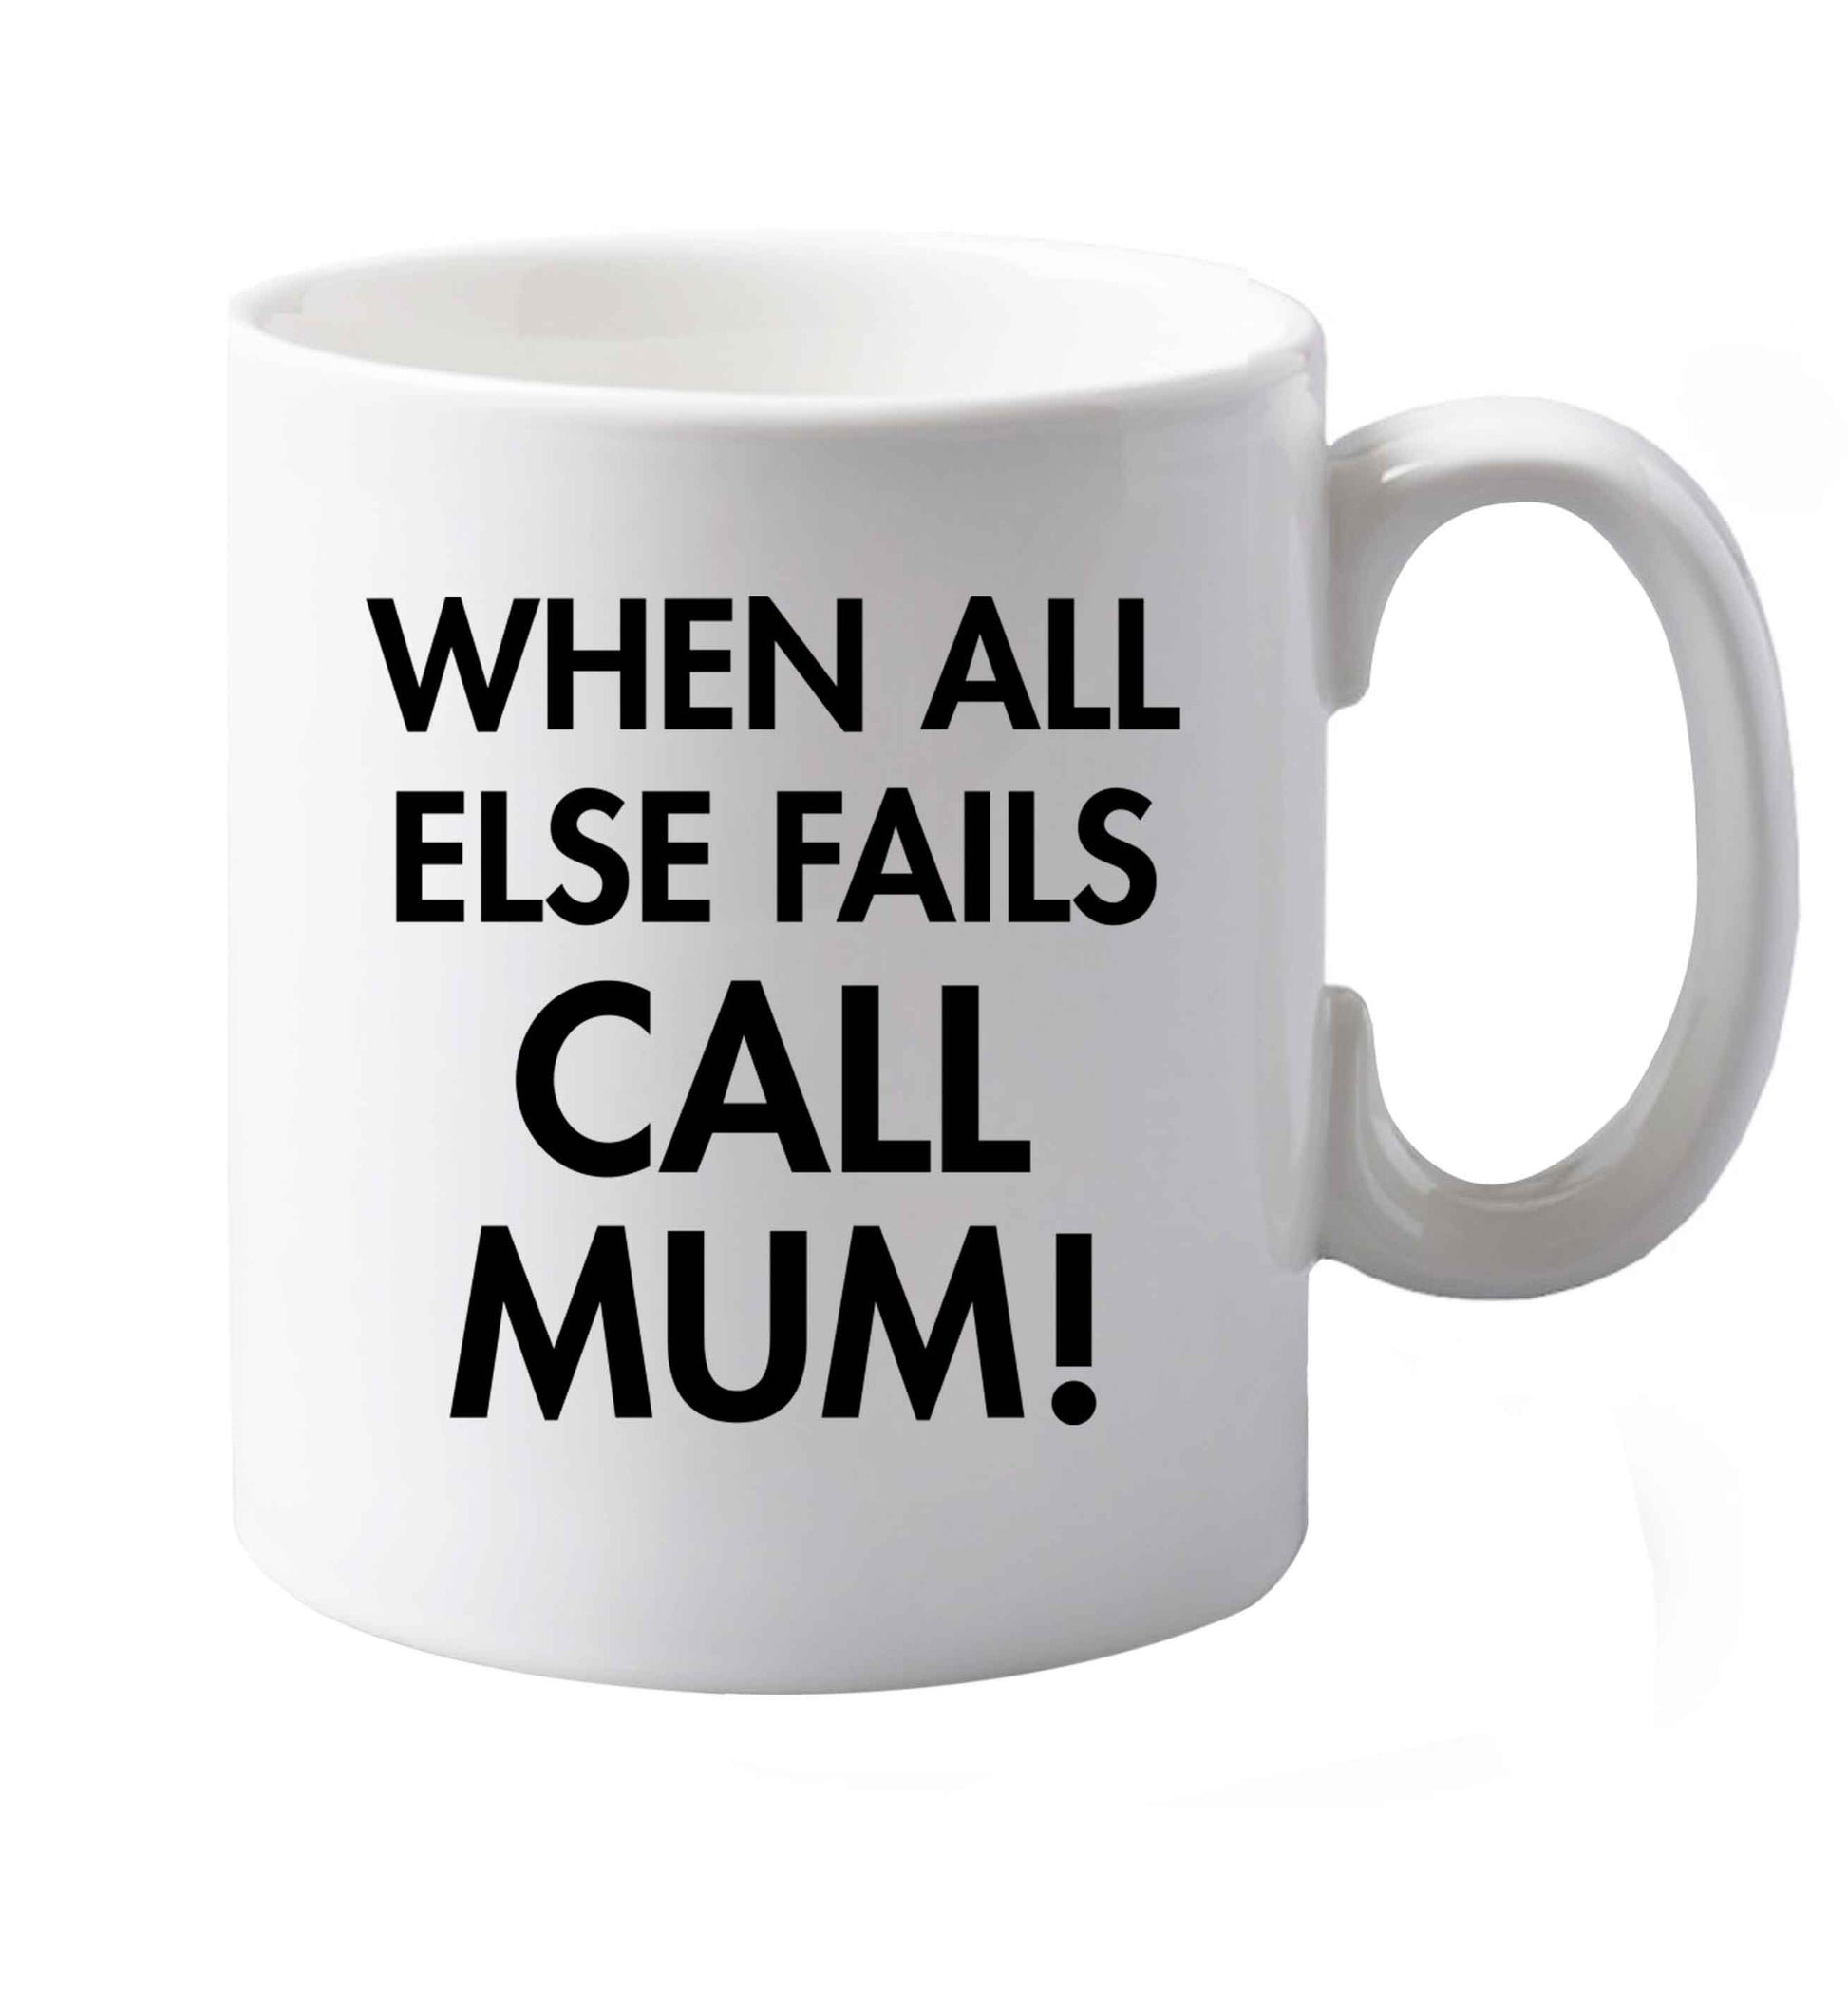 10 oz When all else fails call mum! ceramic mug both sides